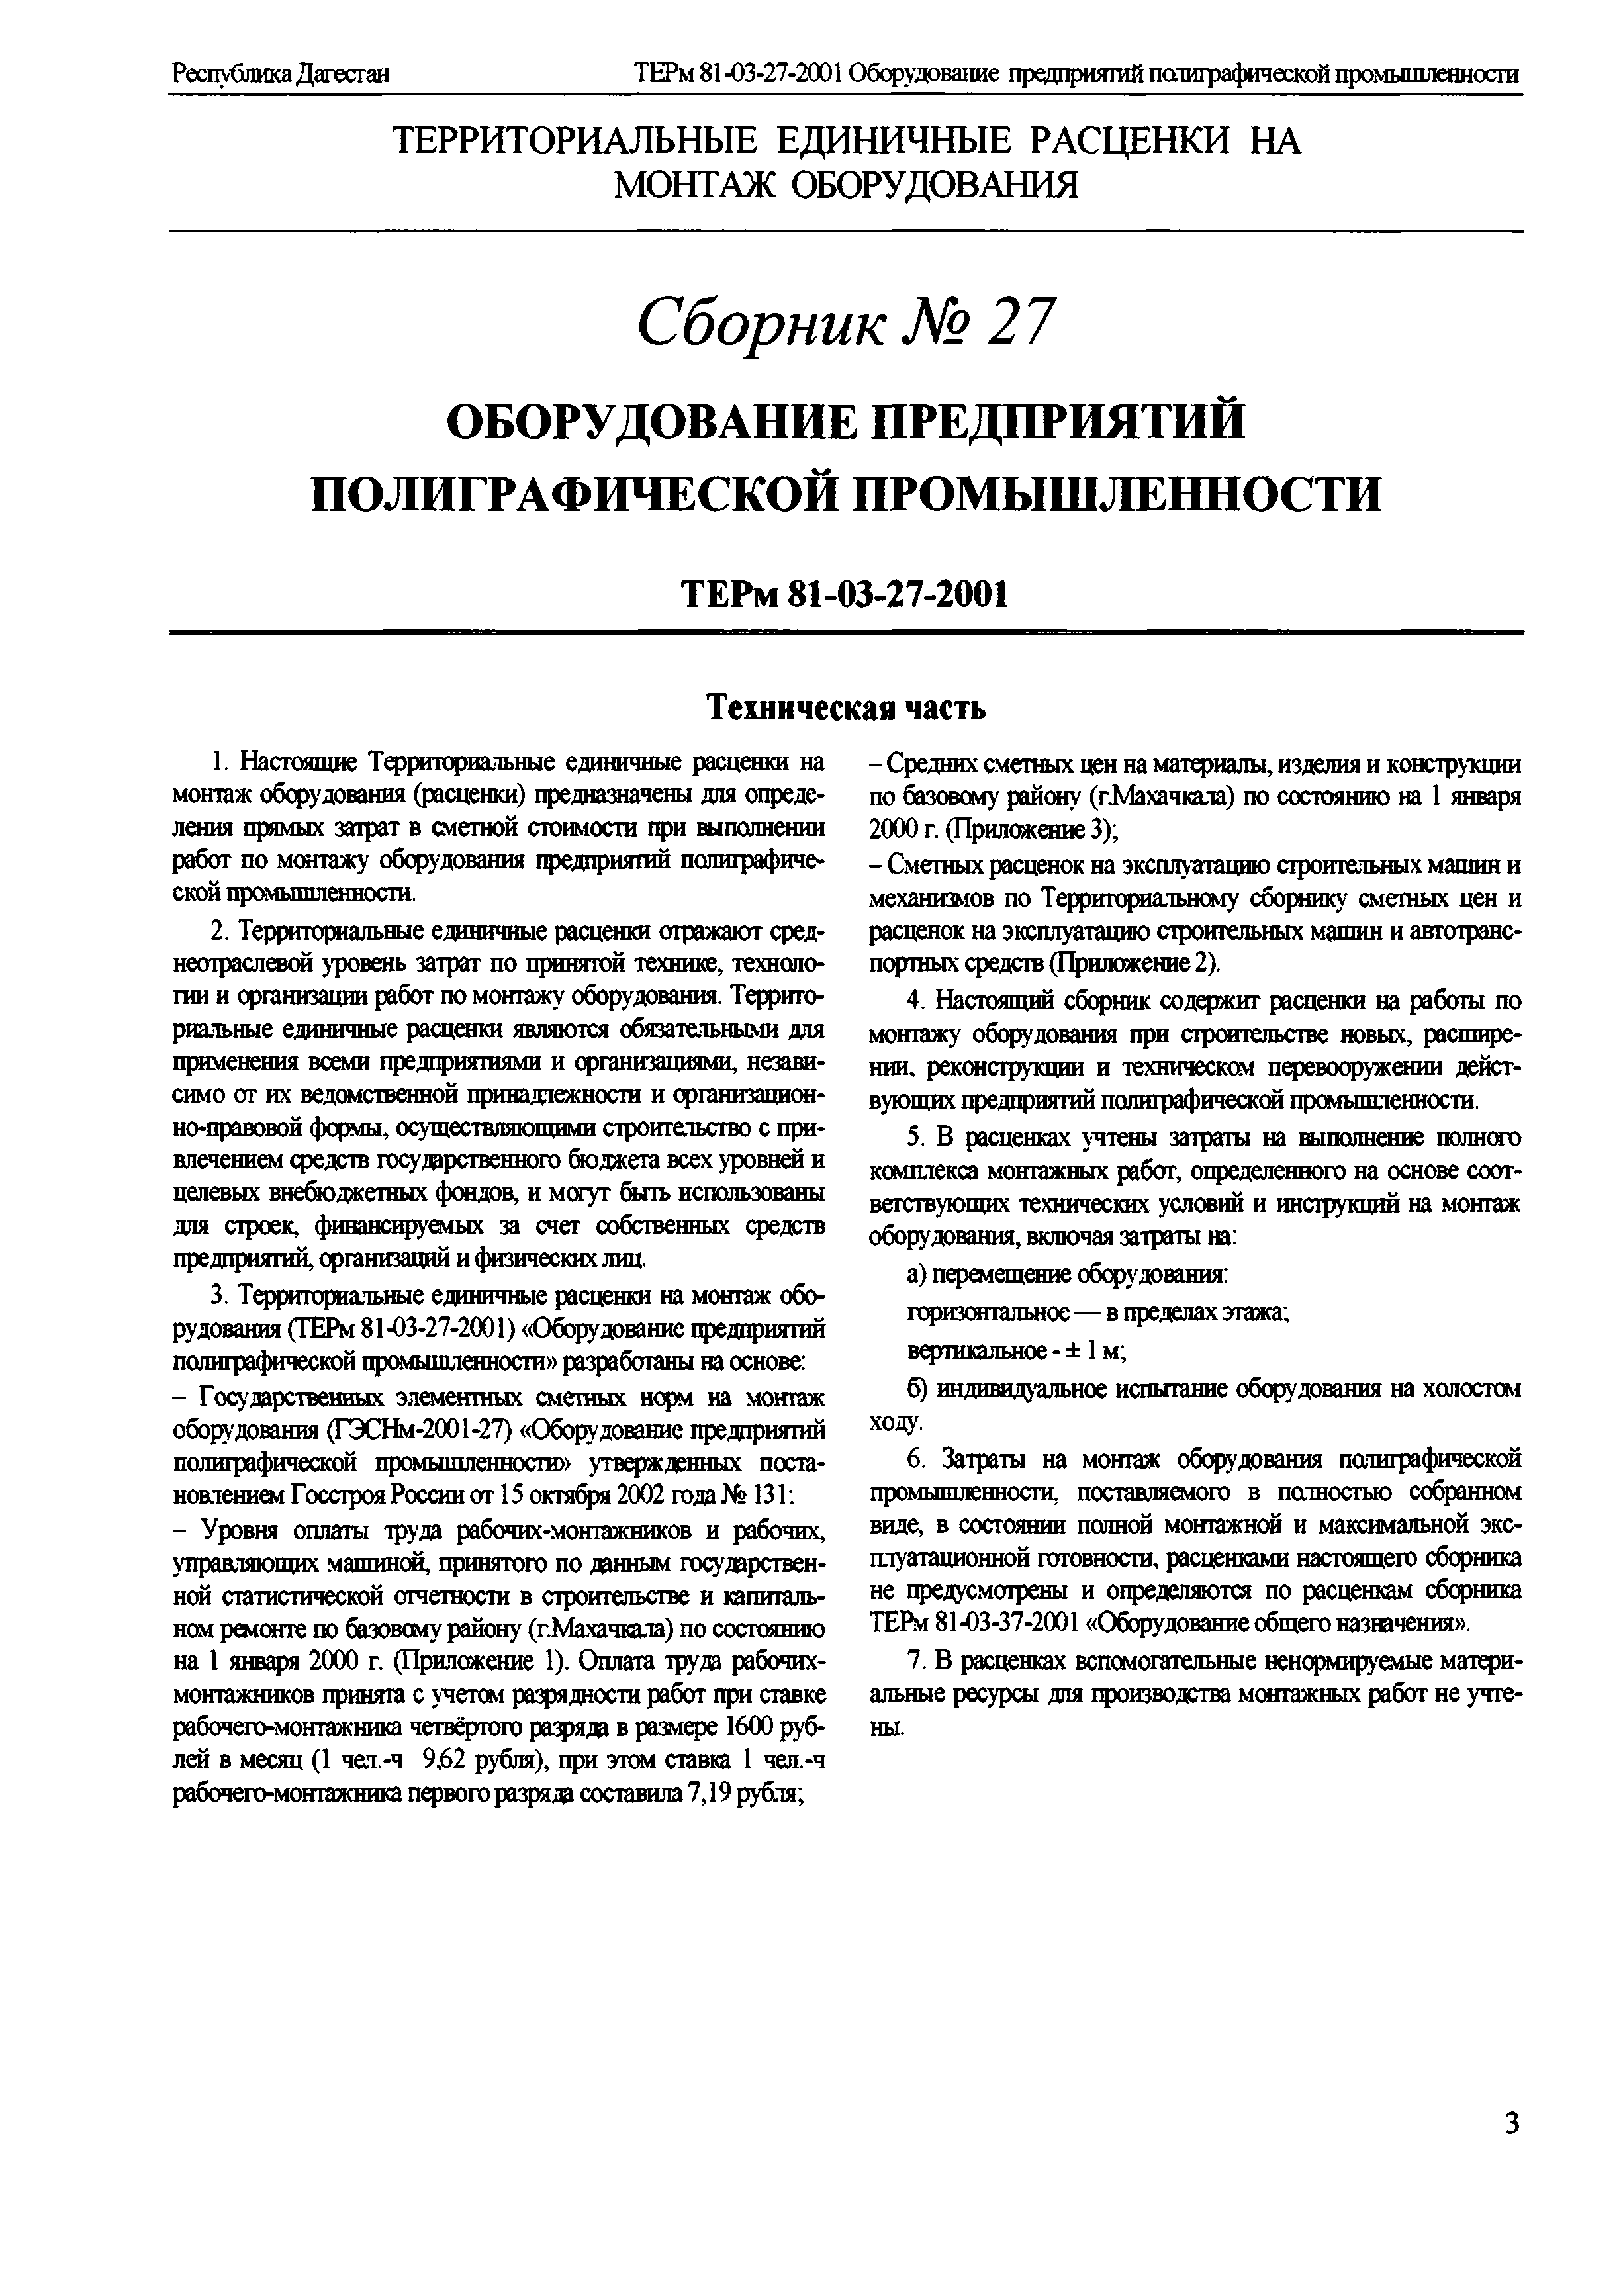 ТЕРм Республика Дагестан 2001-27